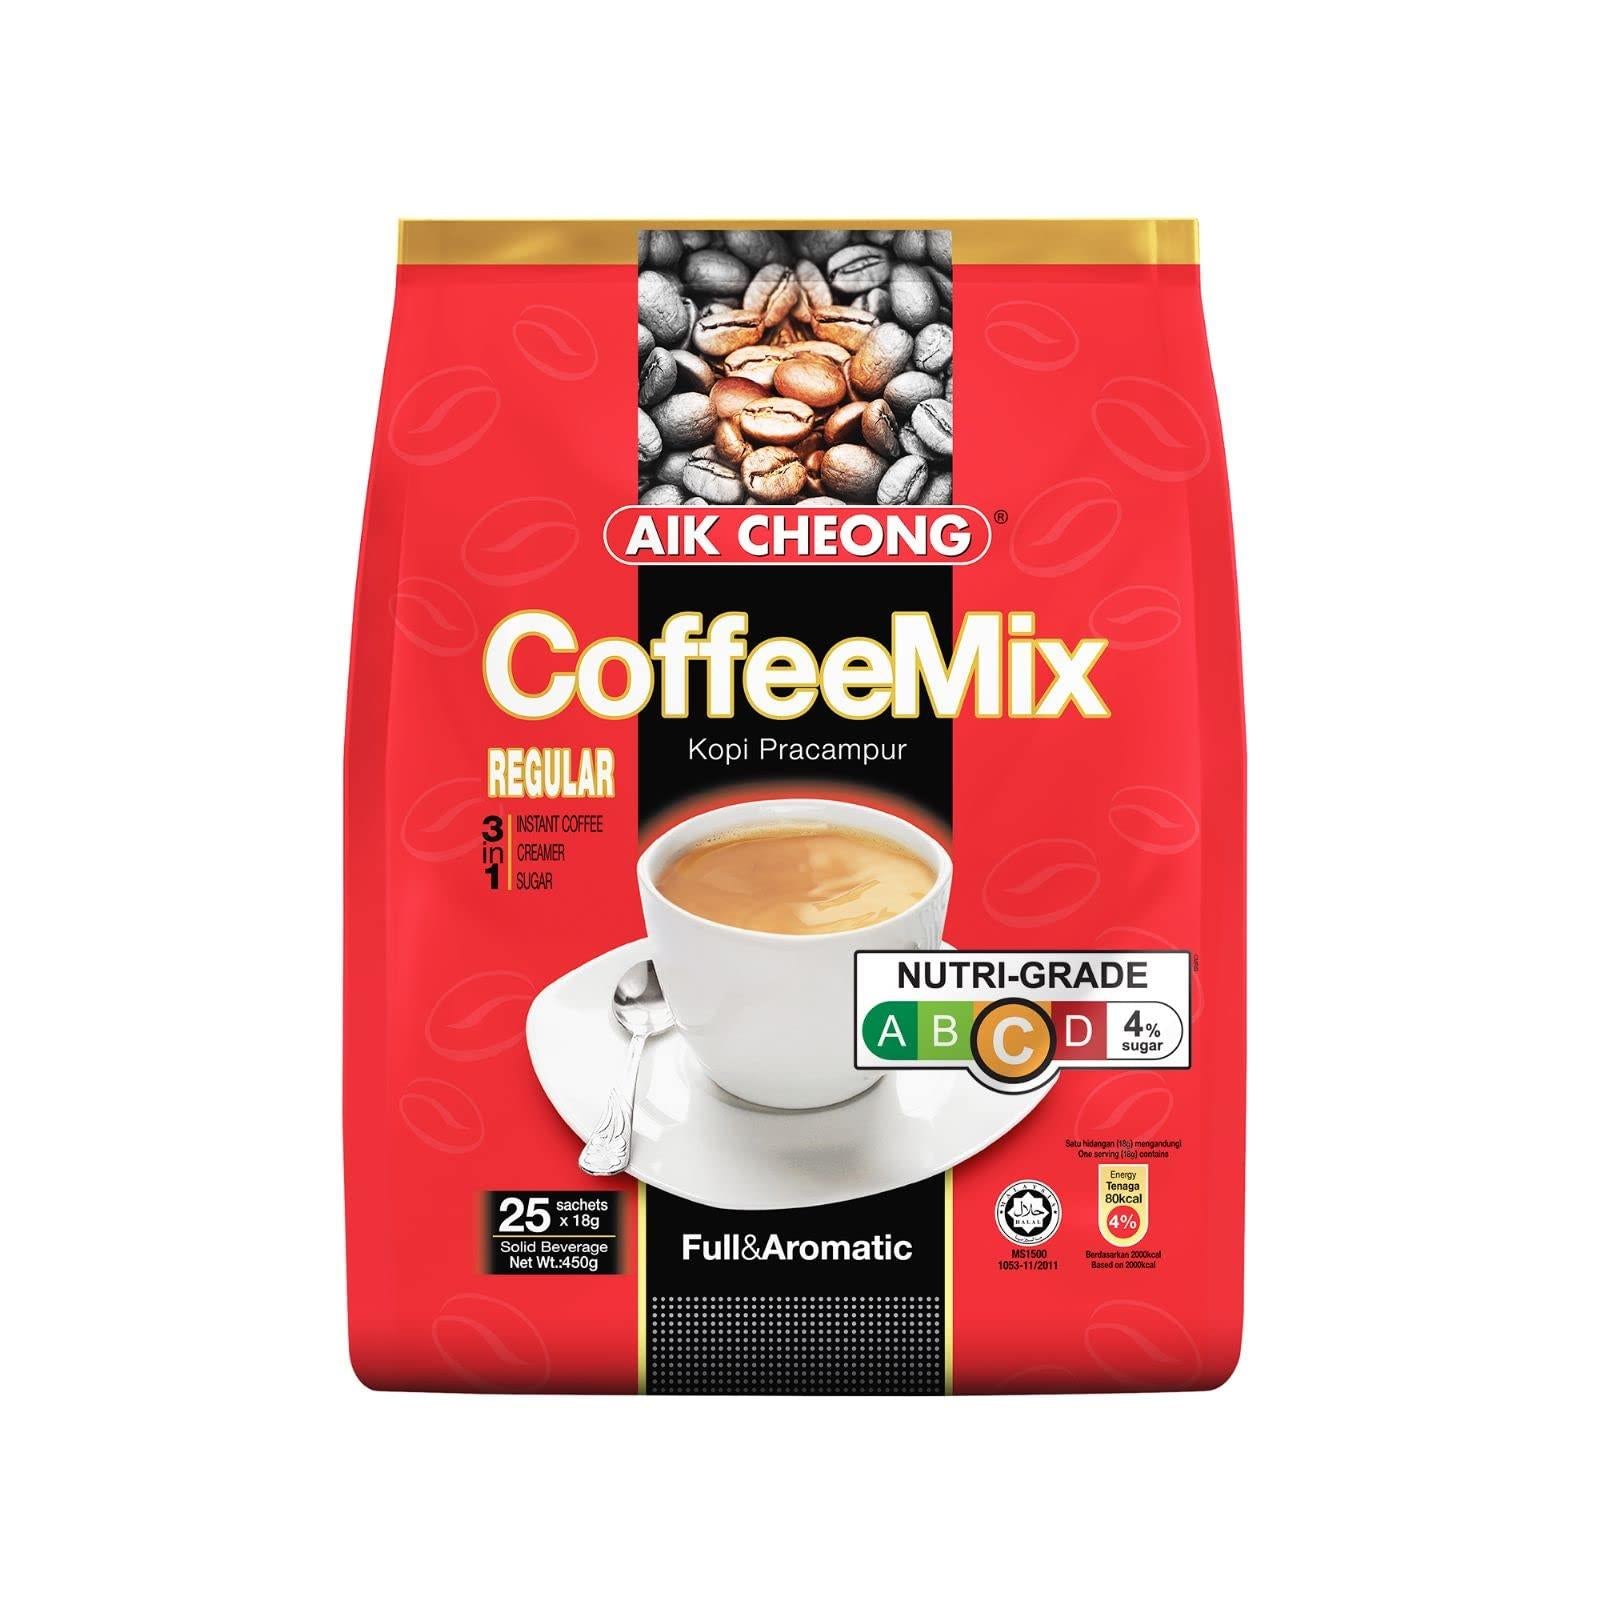 Aik Cheong Instant 3 in 1 Coffee Mix Campuran Minuman Kopi 600g. (20g.x30 Sachets)